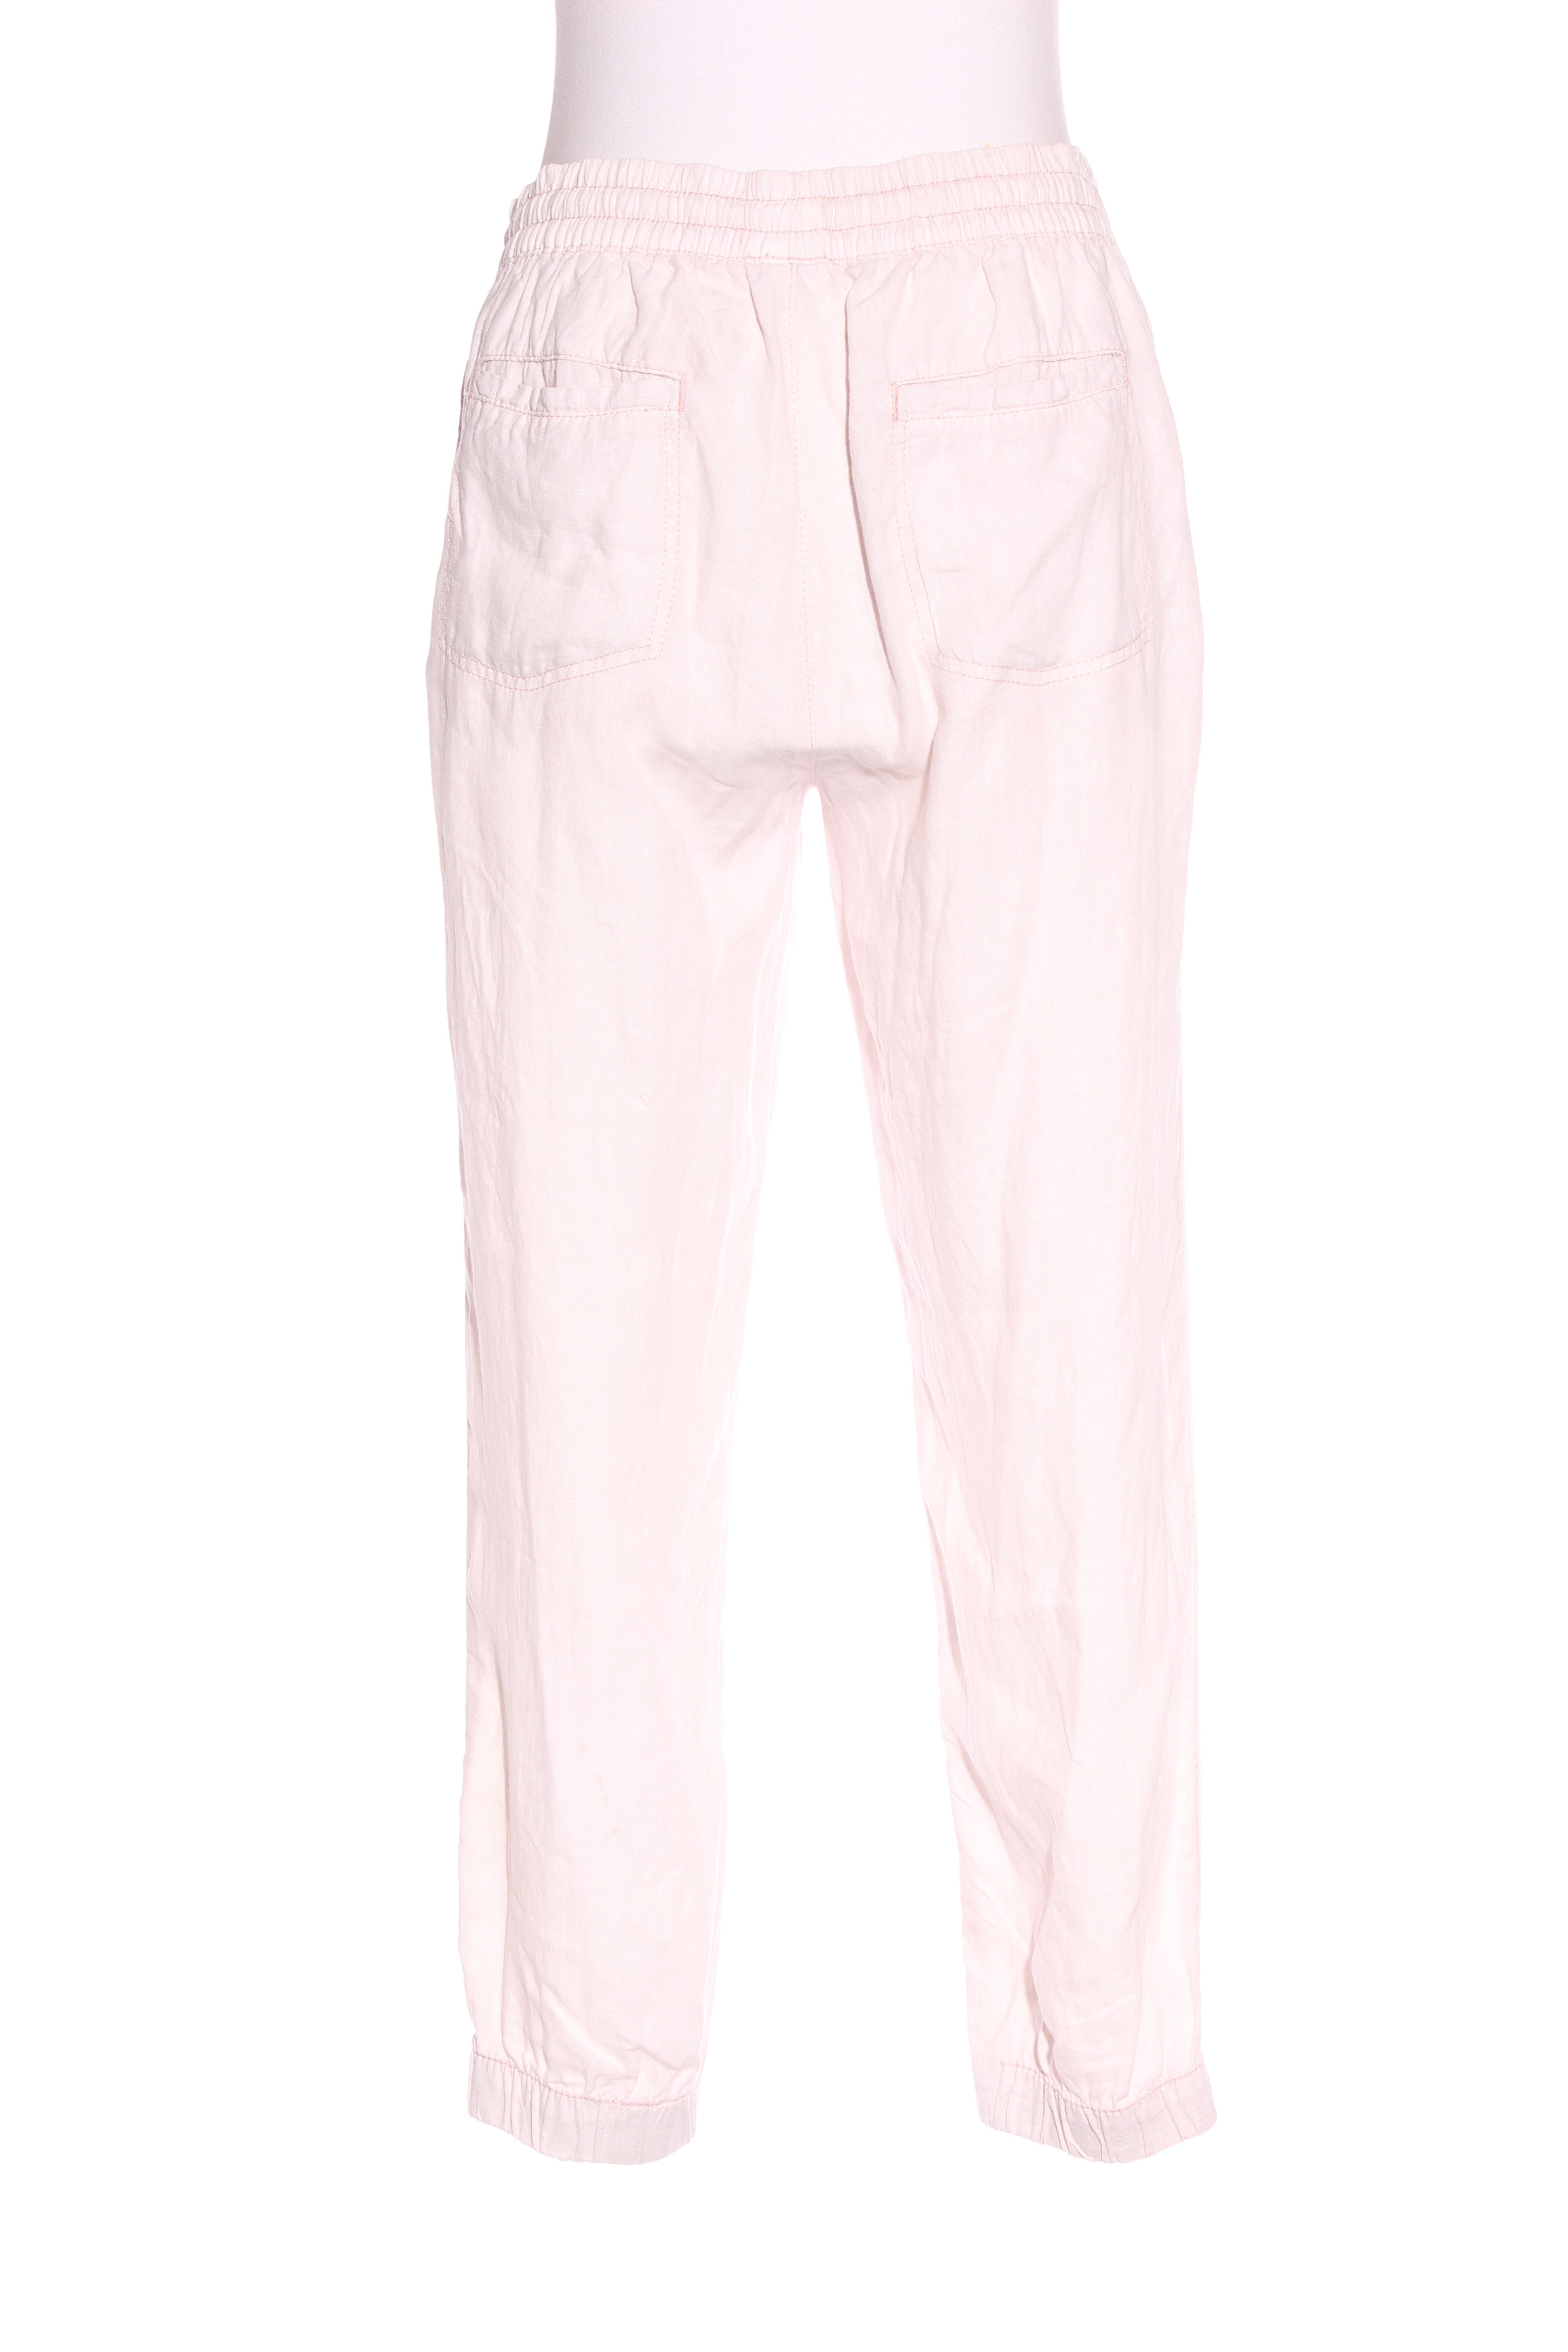 Women's Jeans High Rise Distressed Raw Hem White Stretch Denim Pants Sz. 25  | eBay